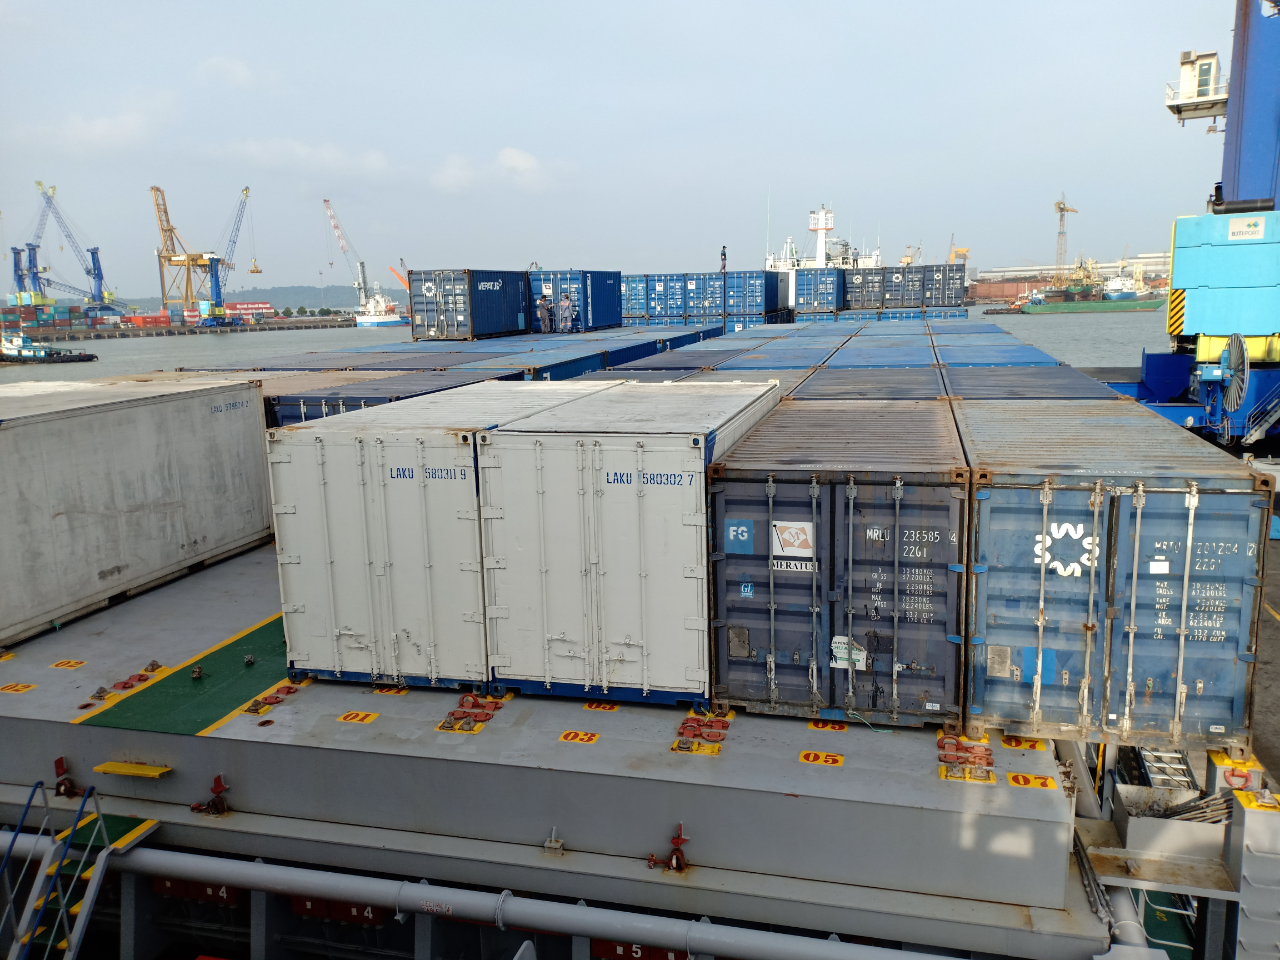 Wacana Kepelabuhan: Cara Menata Container di Kapal Agar Tidak Membingungkan, Simak!